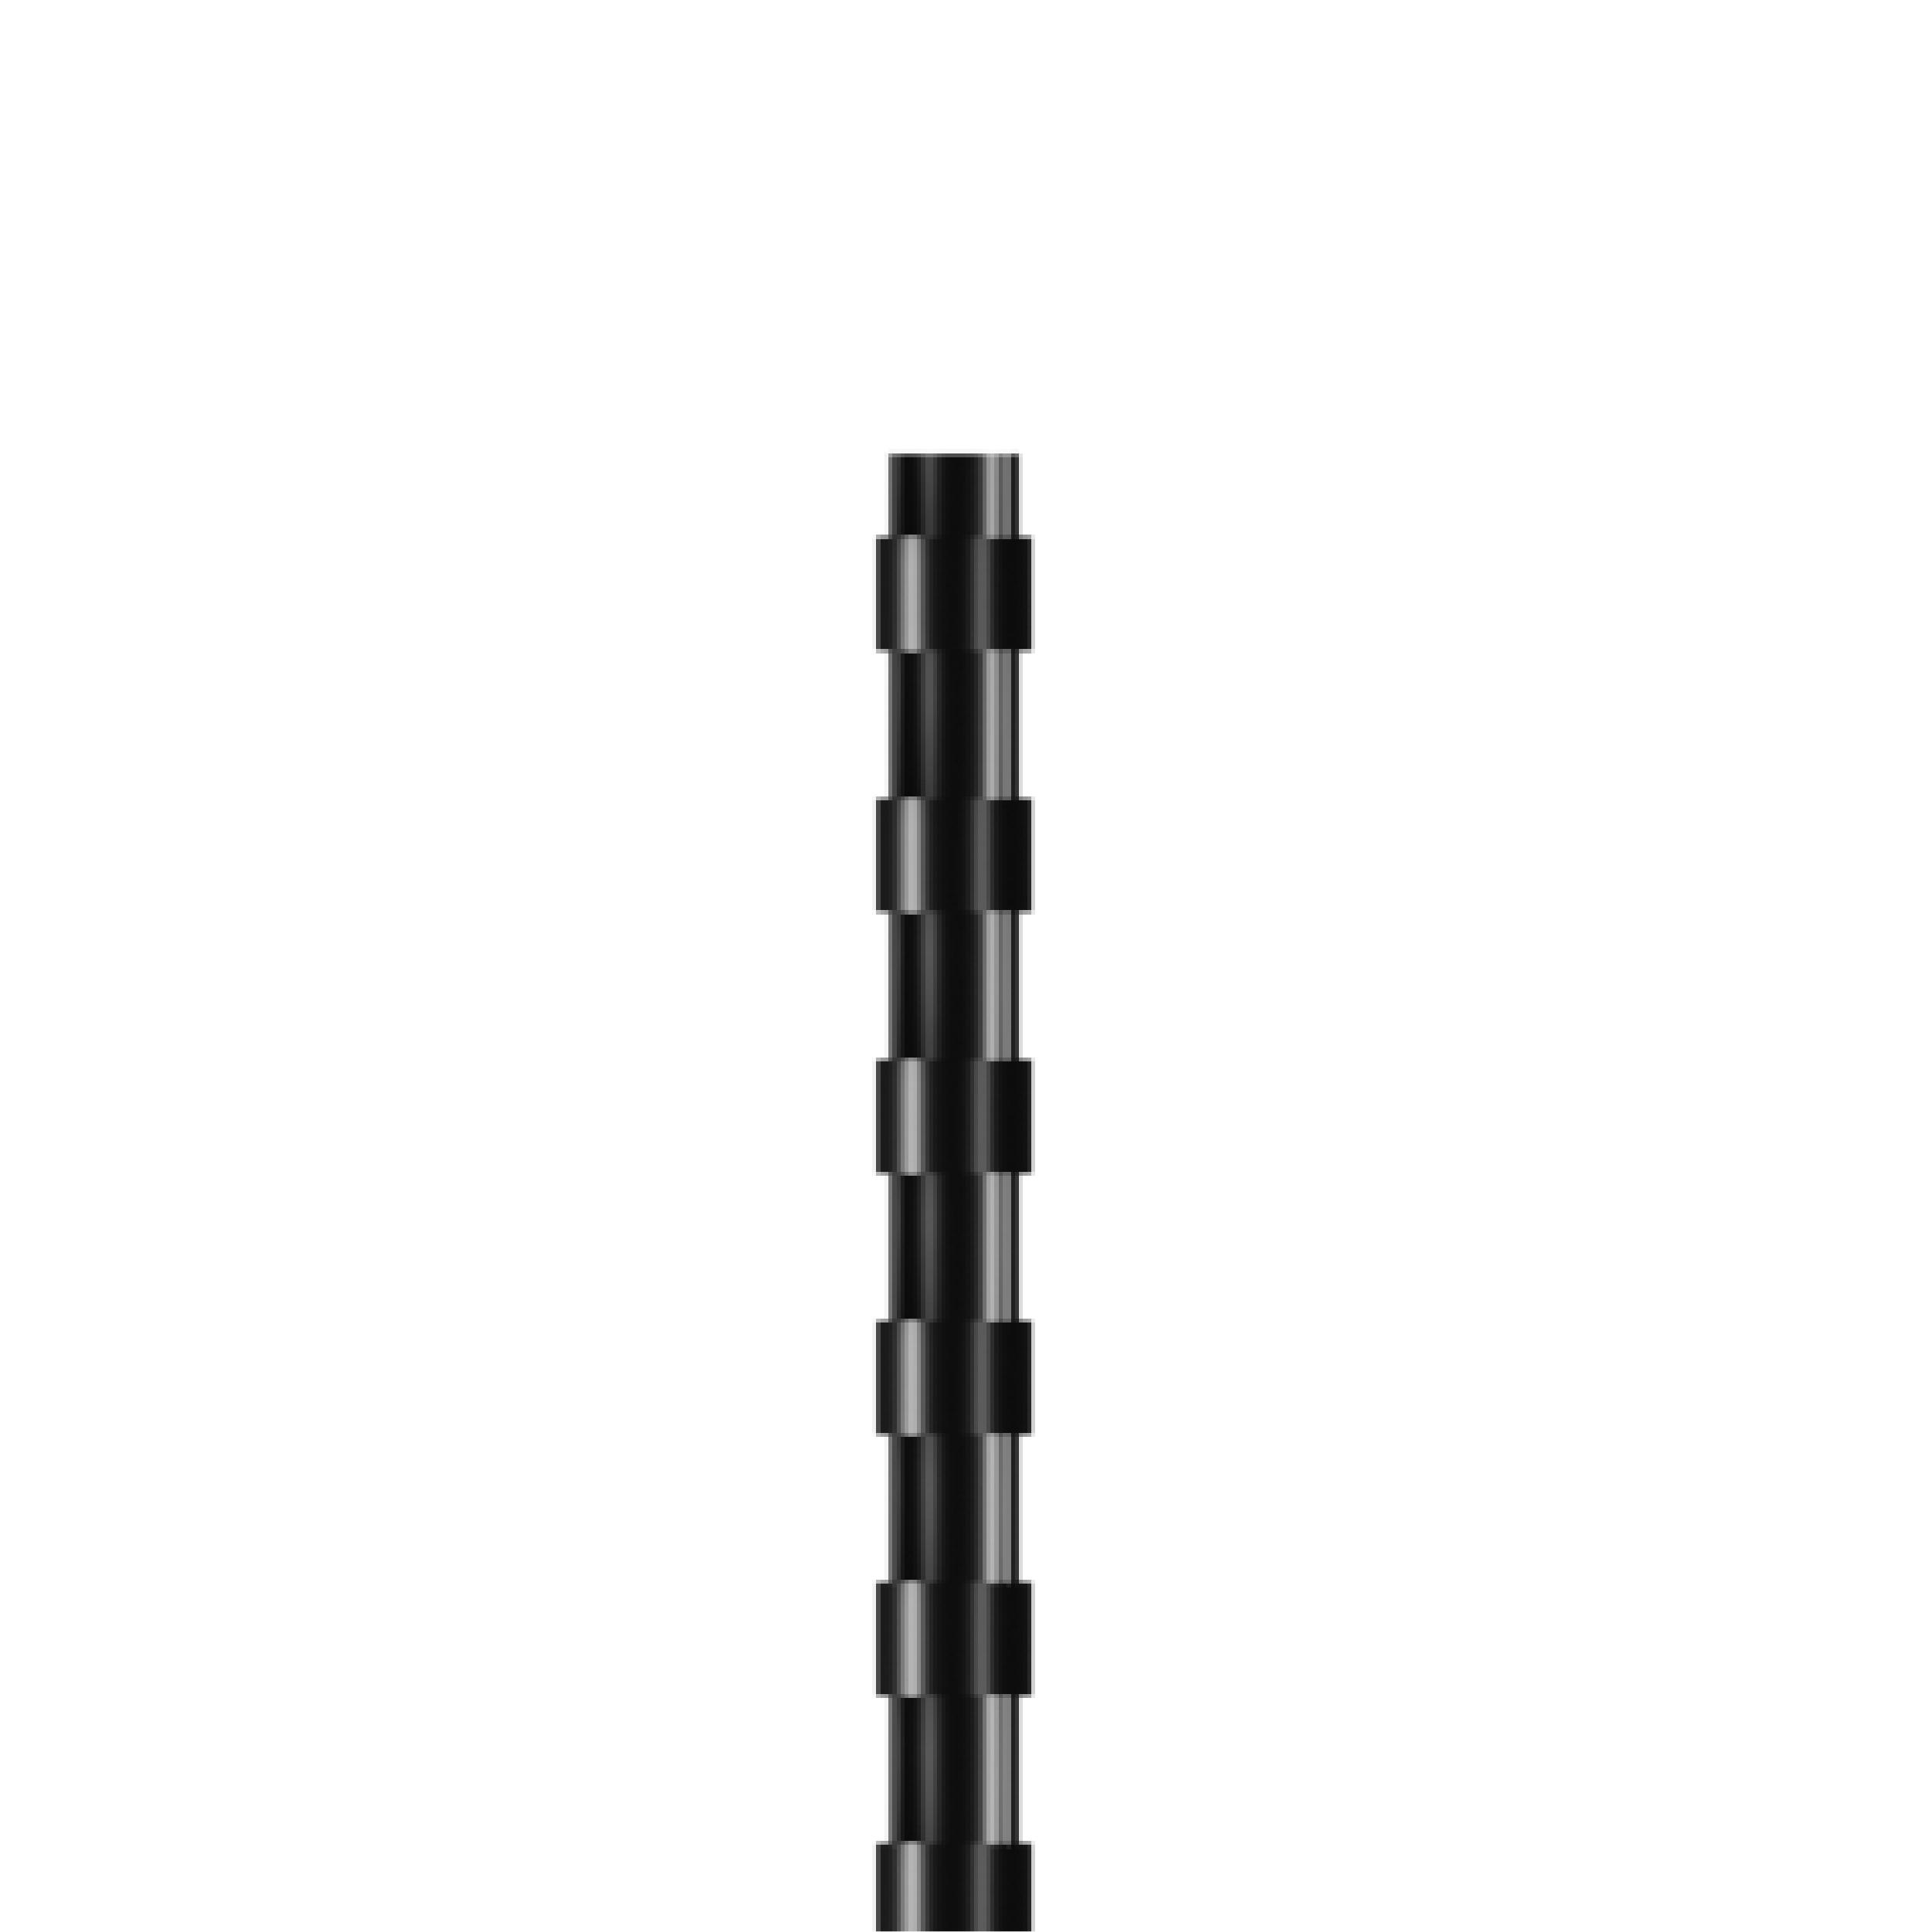 RAADO 8mm Plastic Spiral Binding Comb, Black